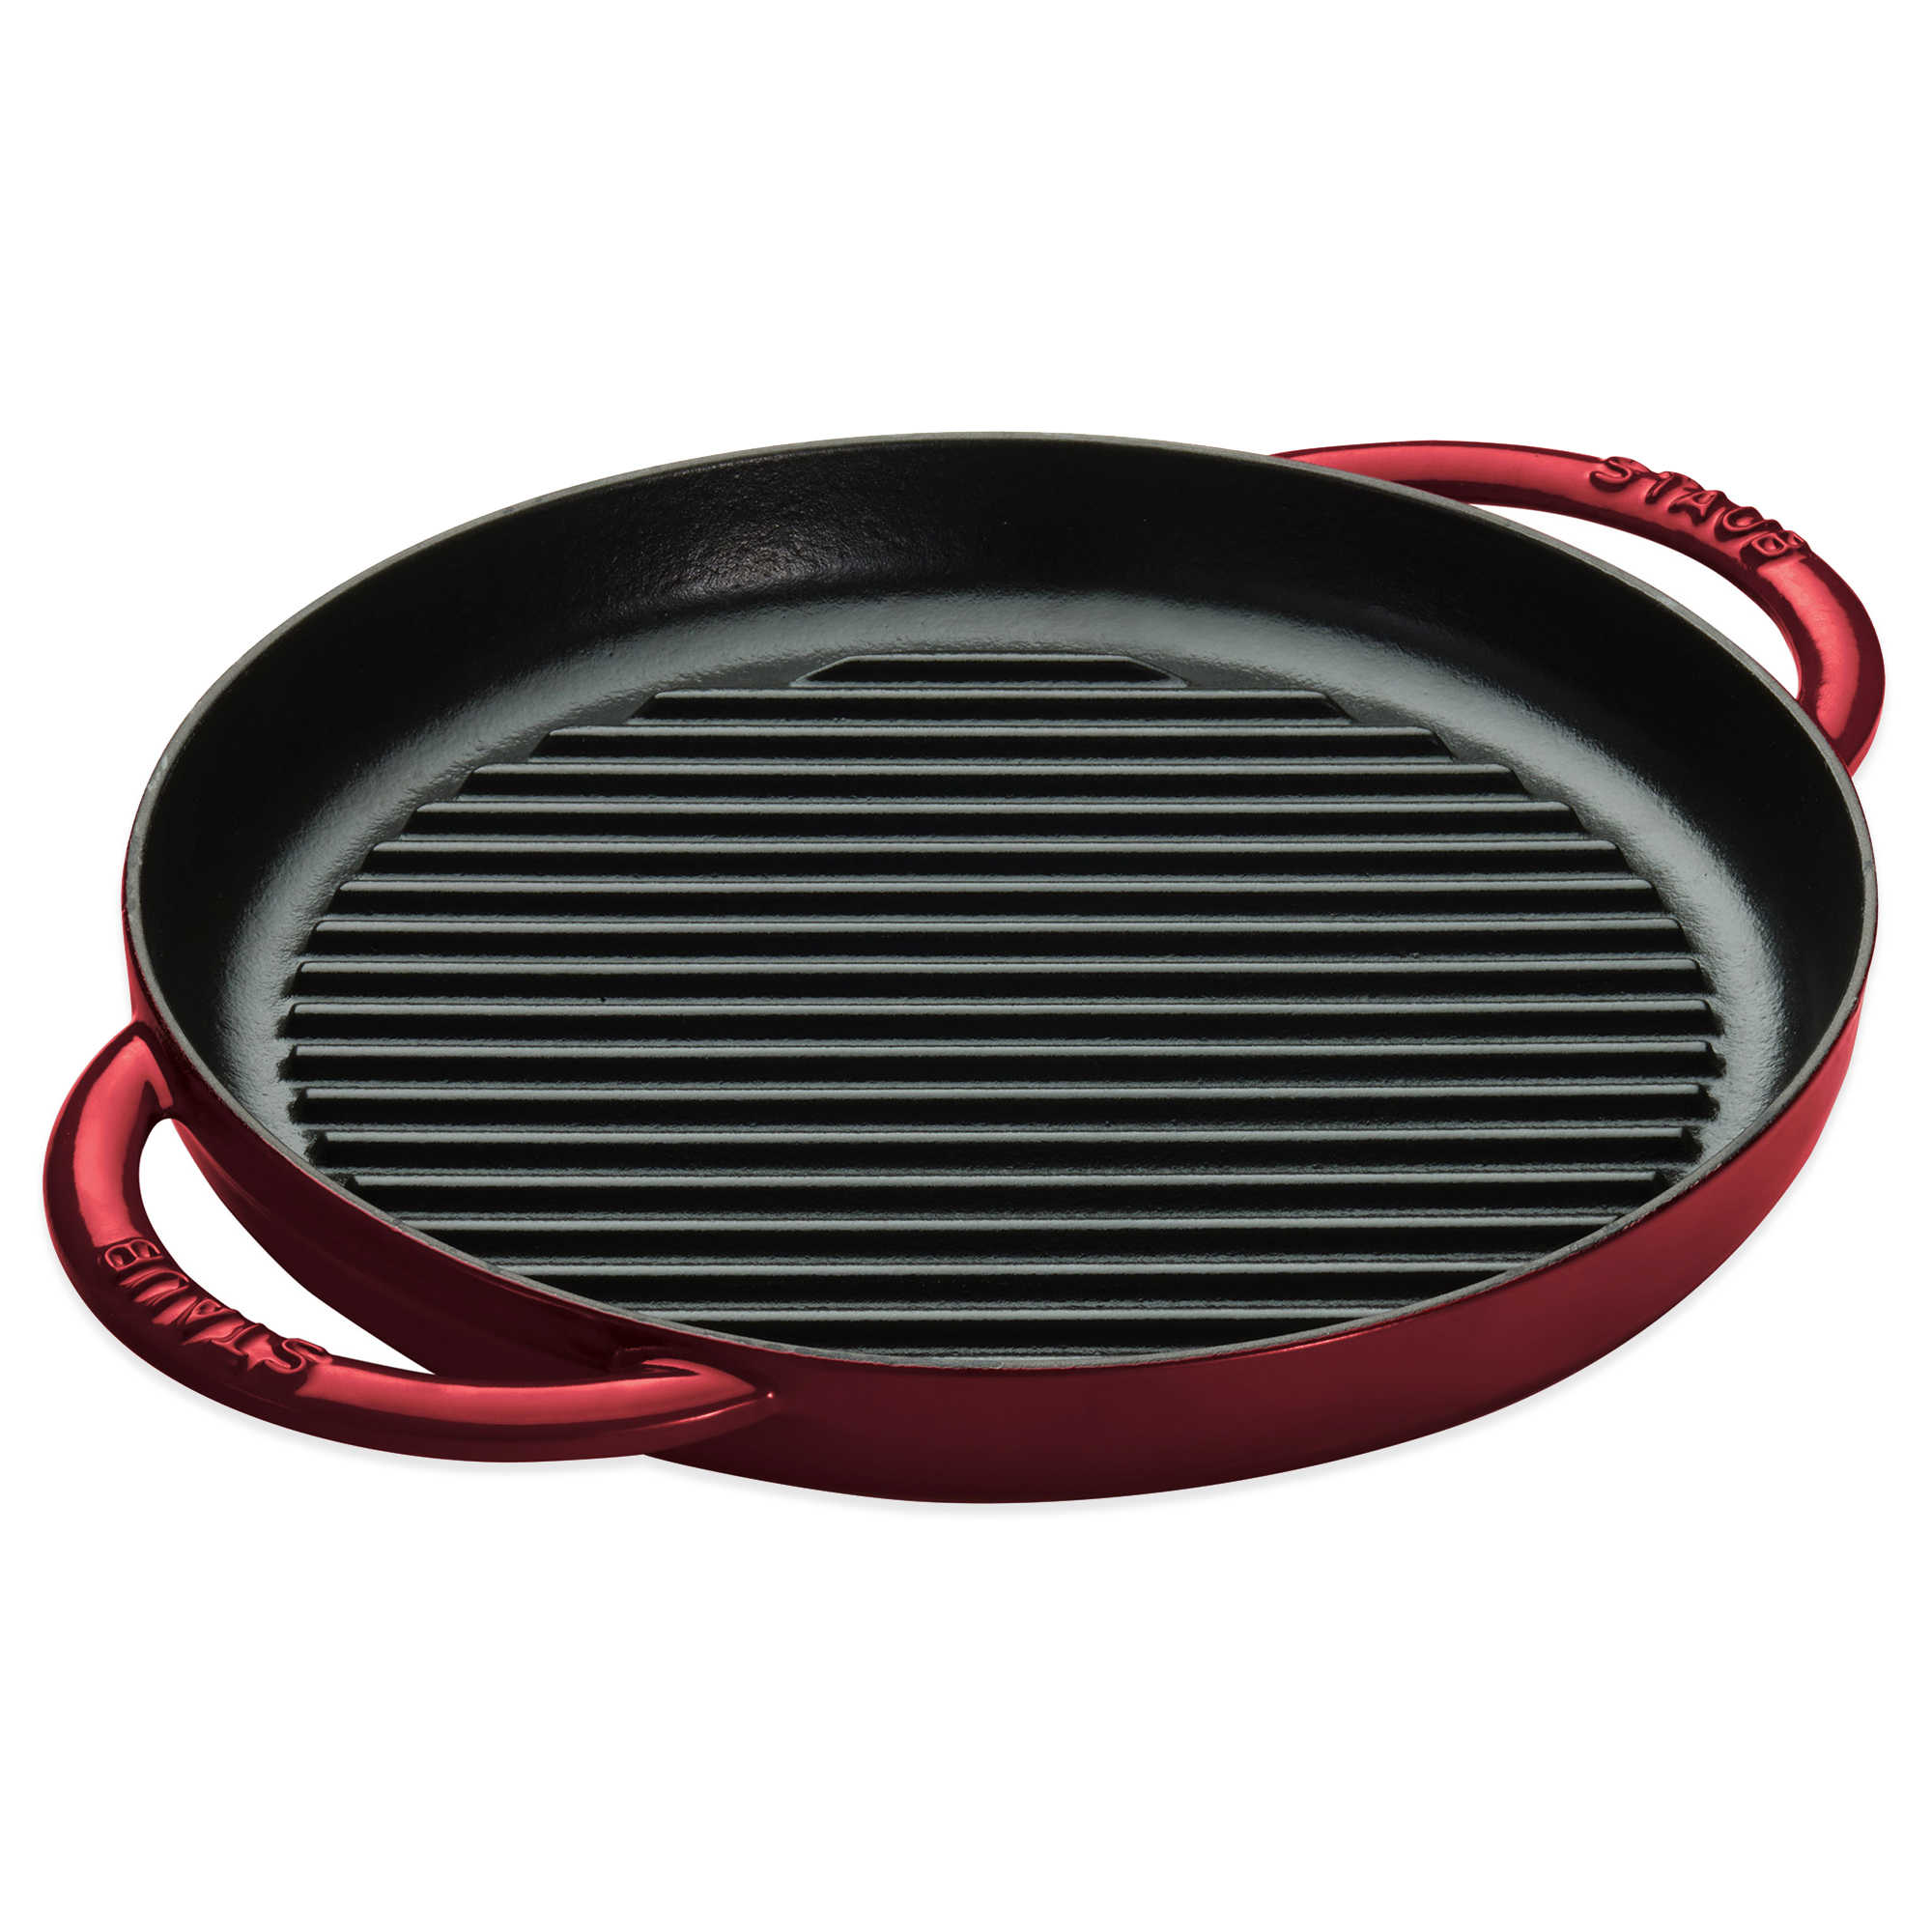 Searing Grill Pan